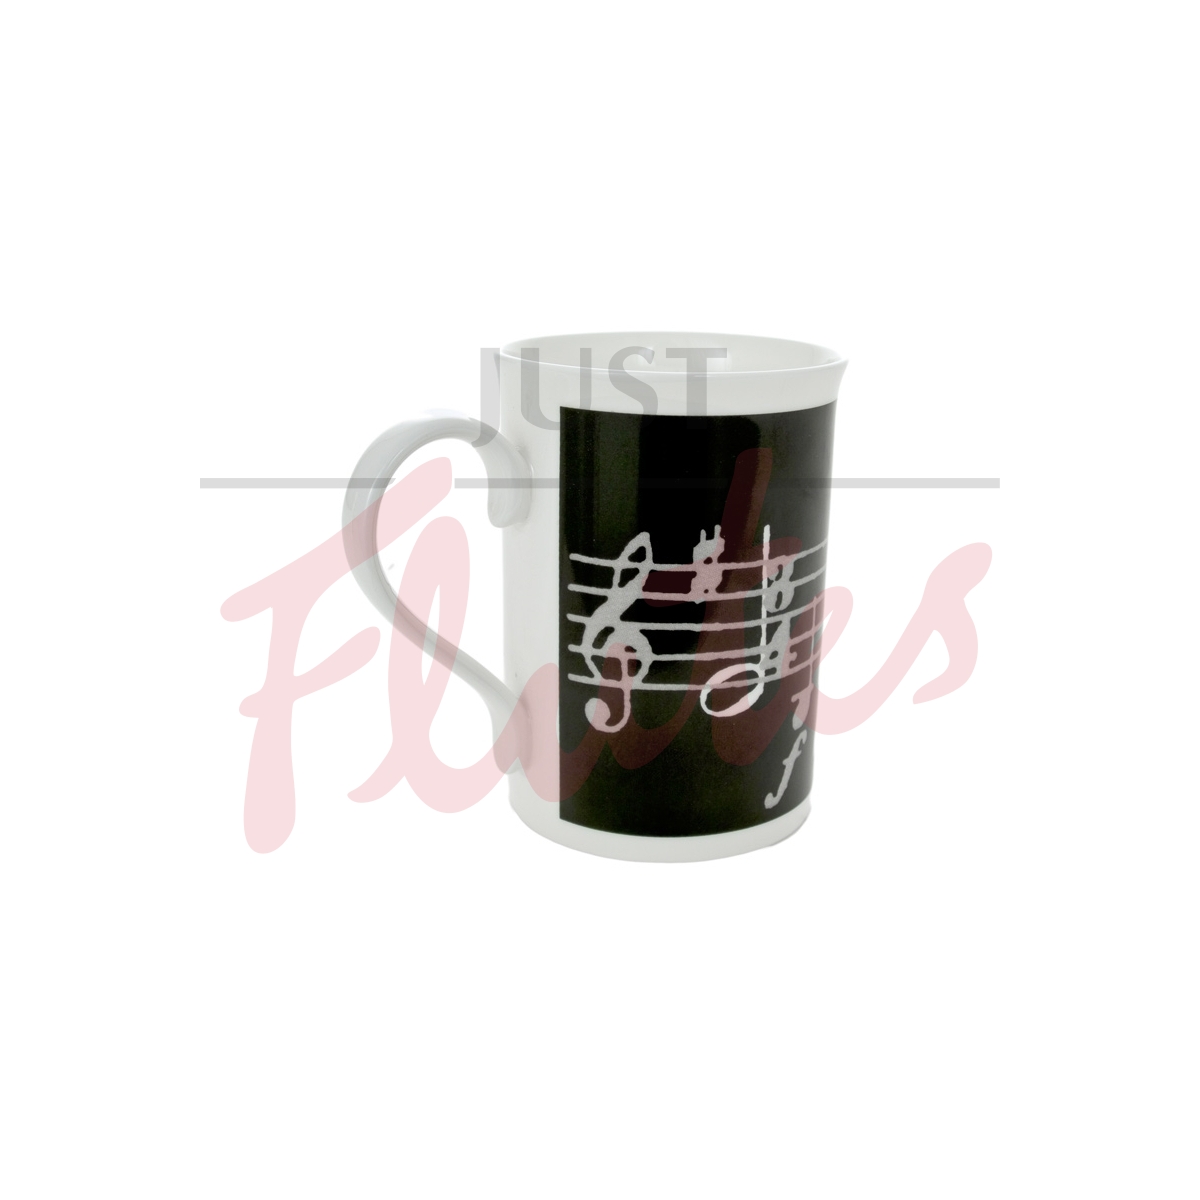 Bone China Music Themed Mug - Black with White Music Notes